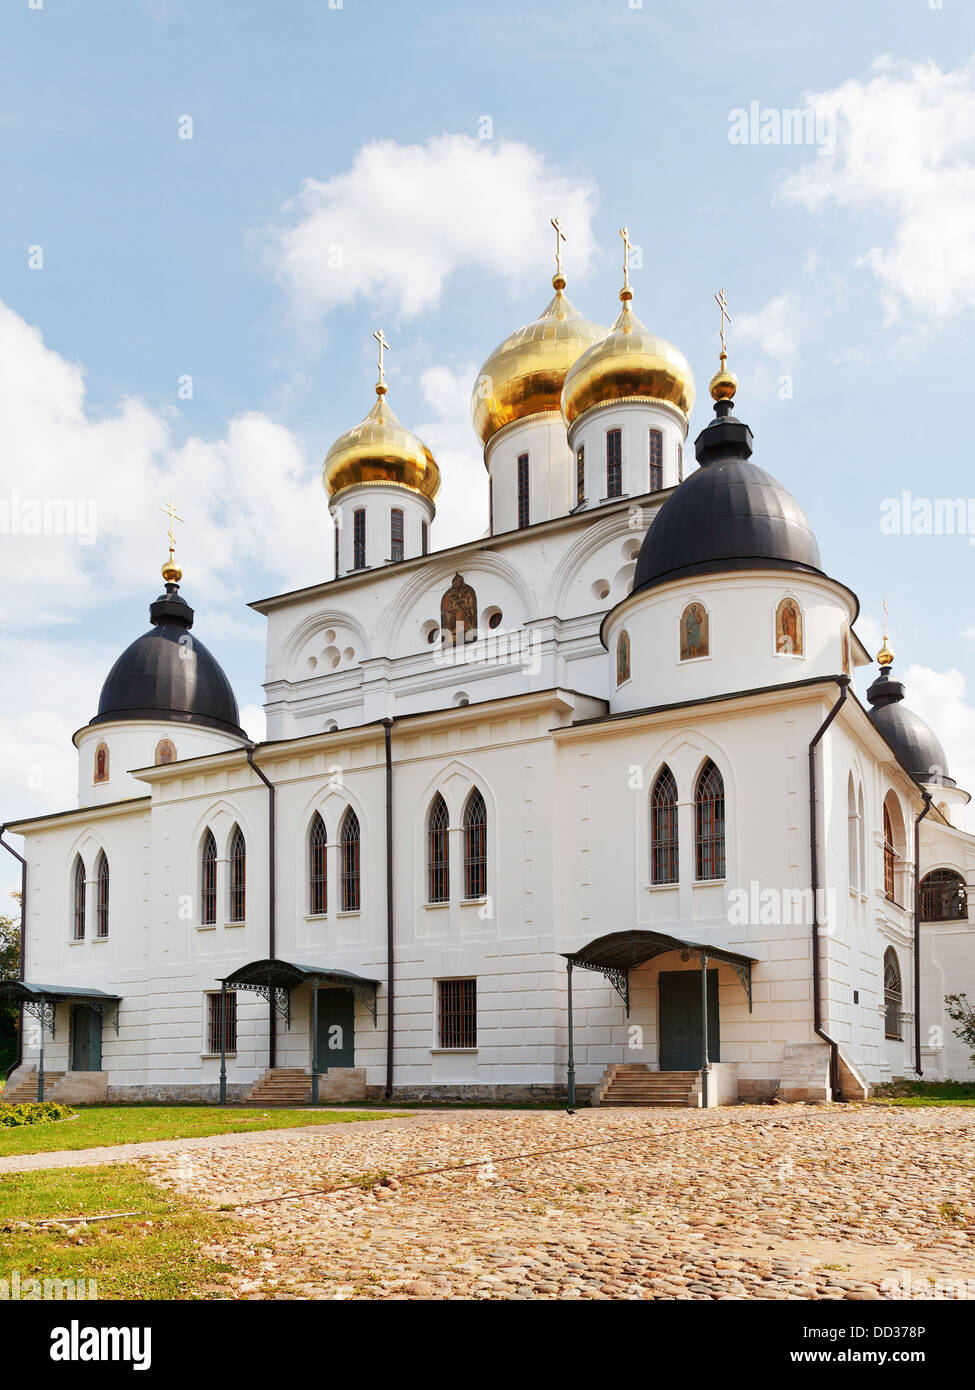 facade of Dormition Cathedral of Dmitrov Kremlin, Russia Stock Photo